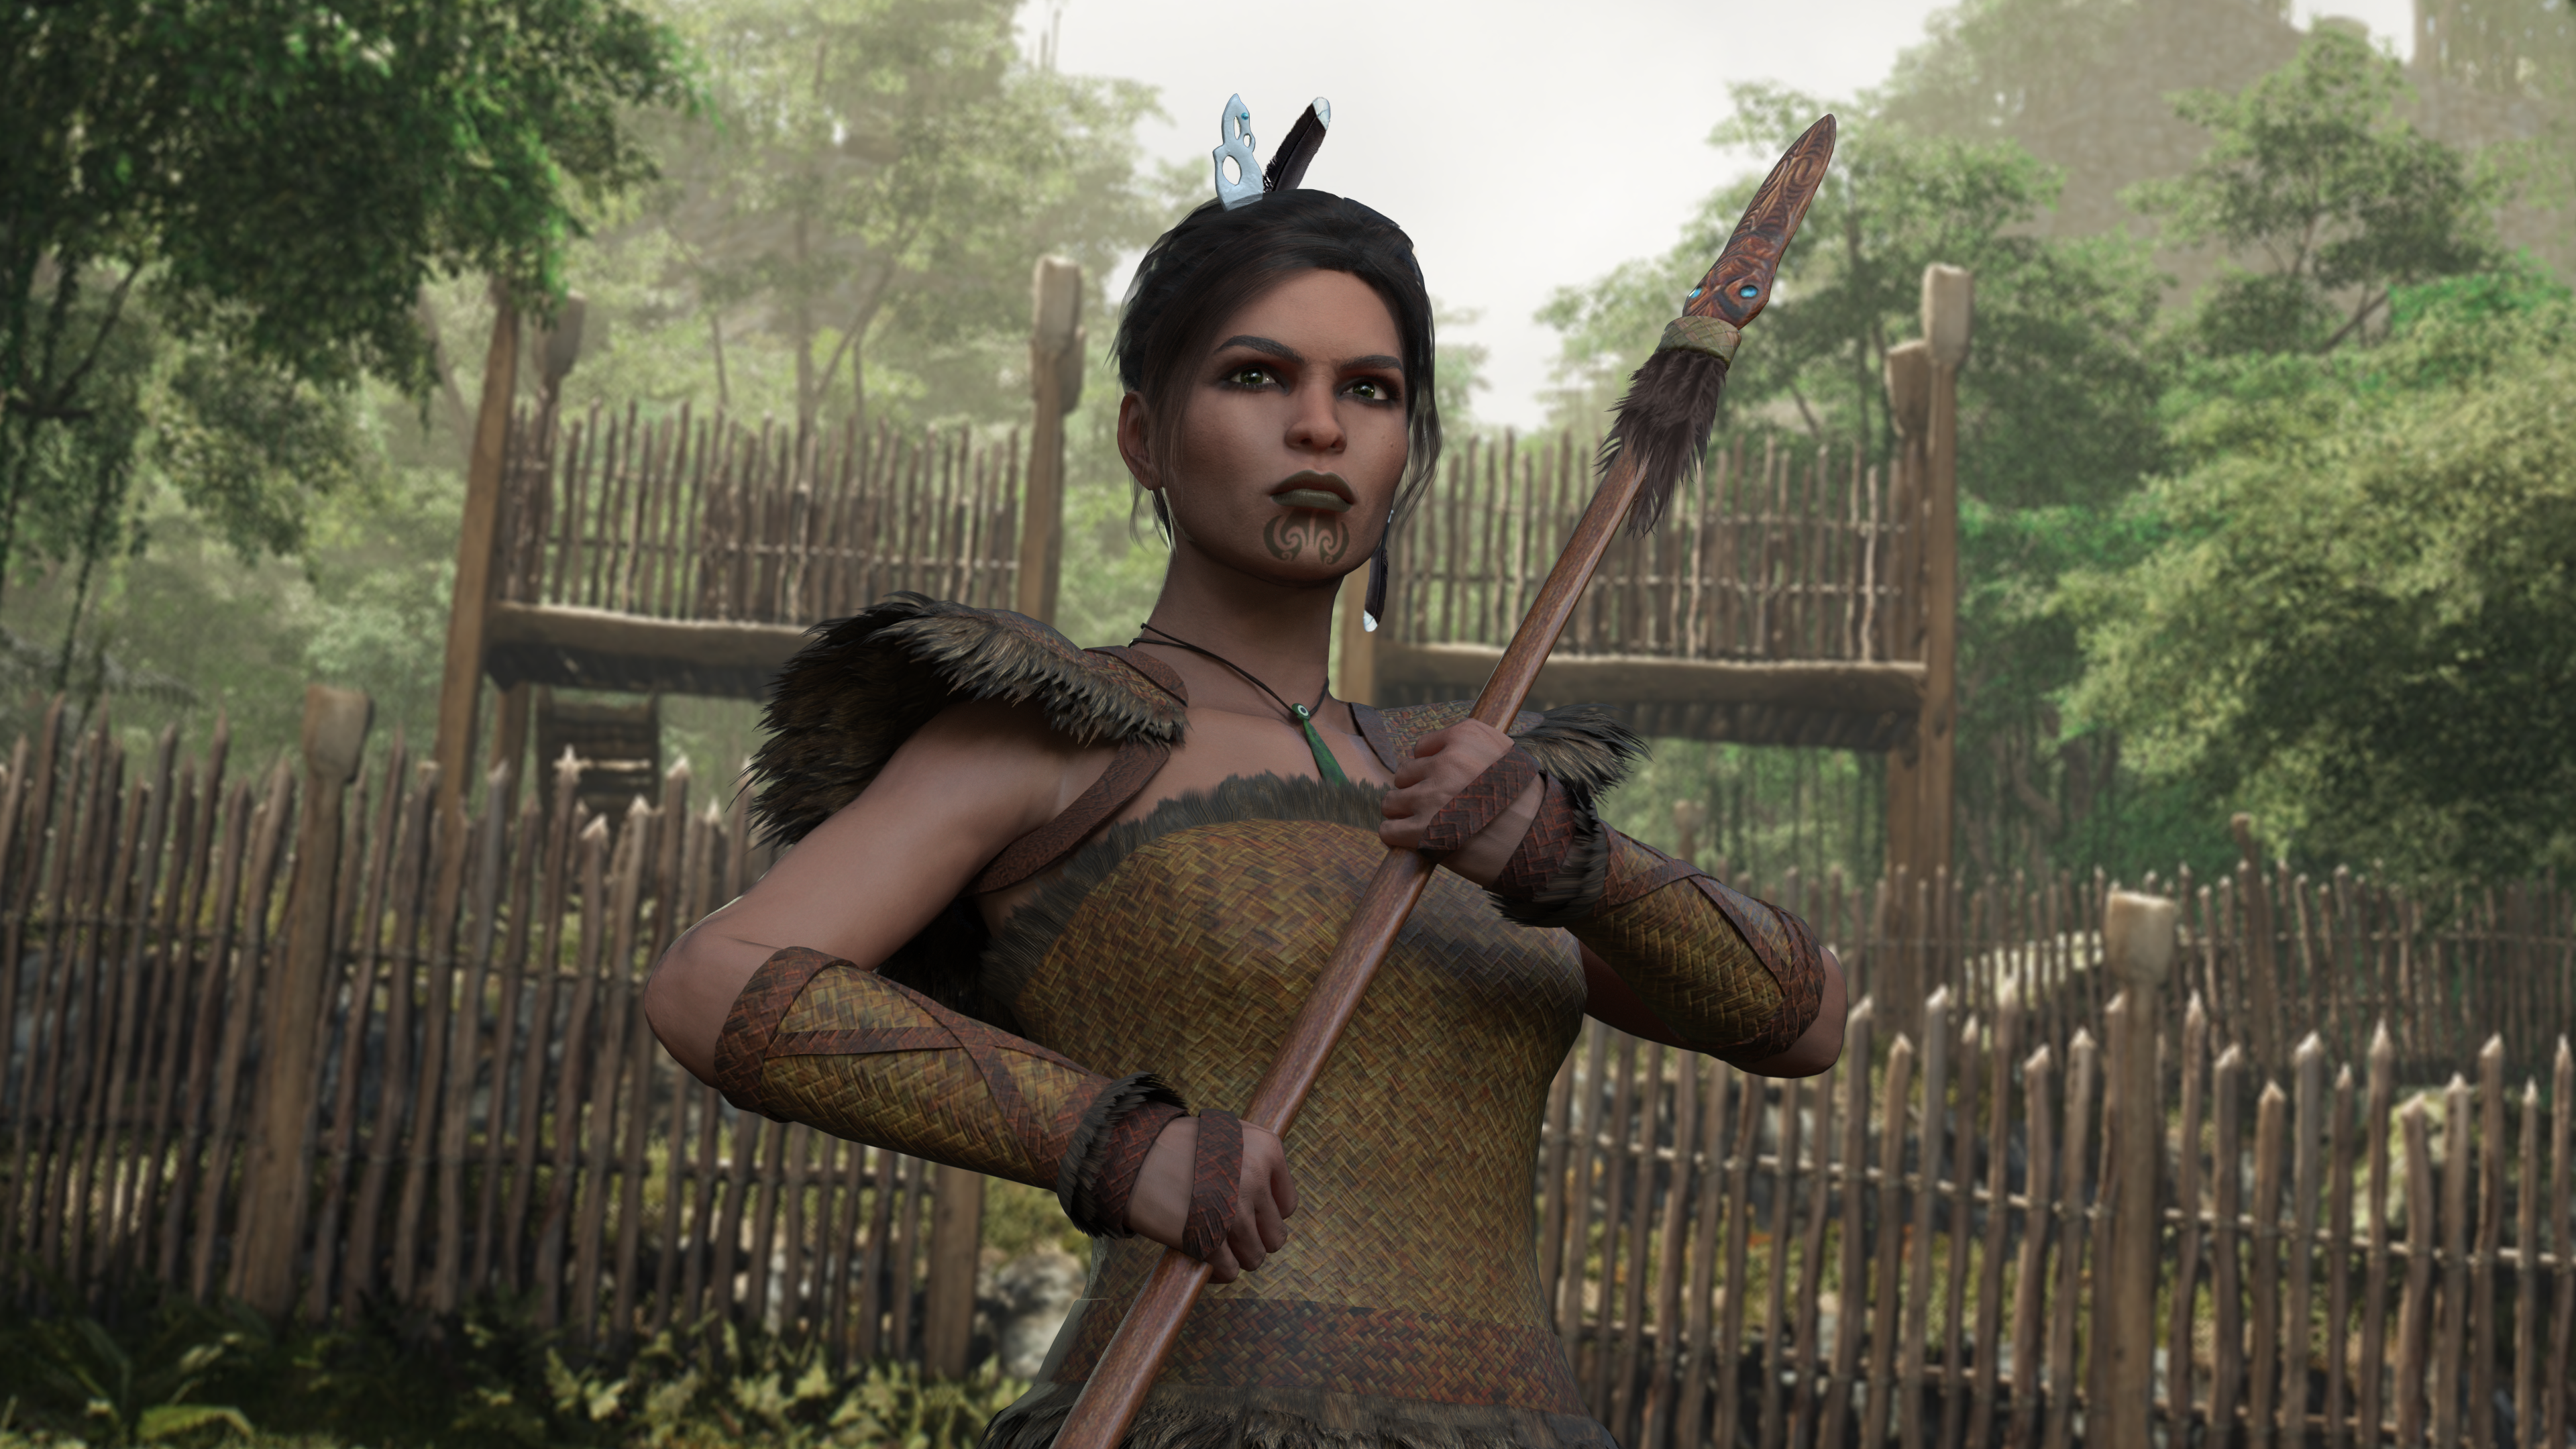 Guardian Game - Maori Heroine - Maia